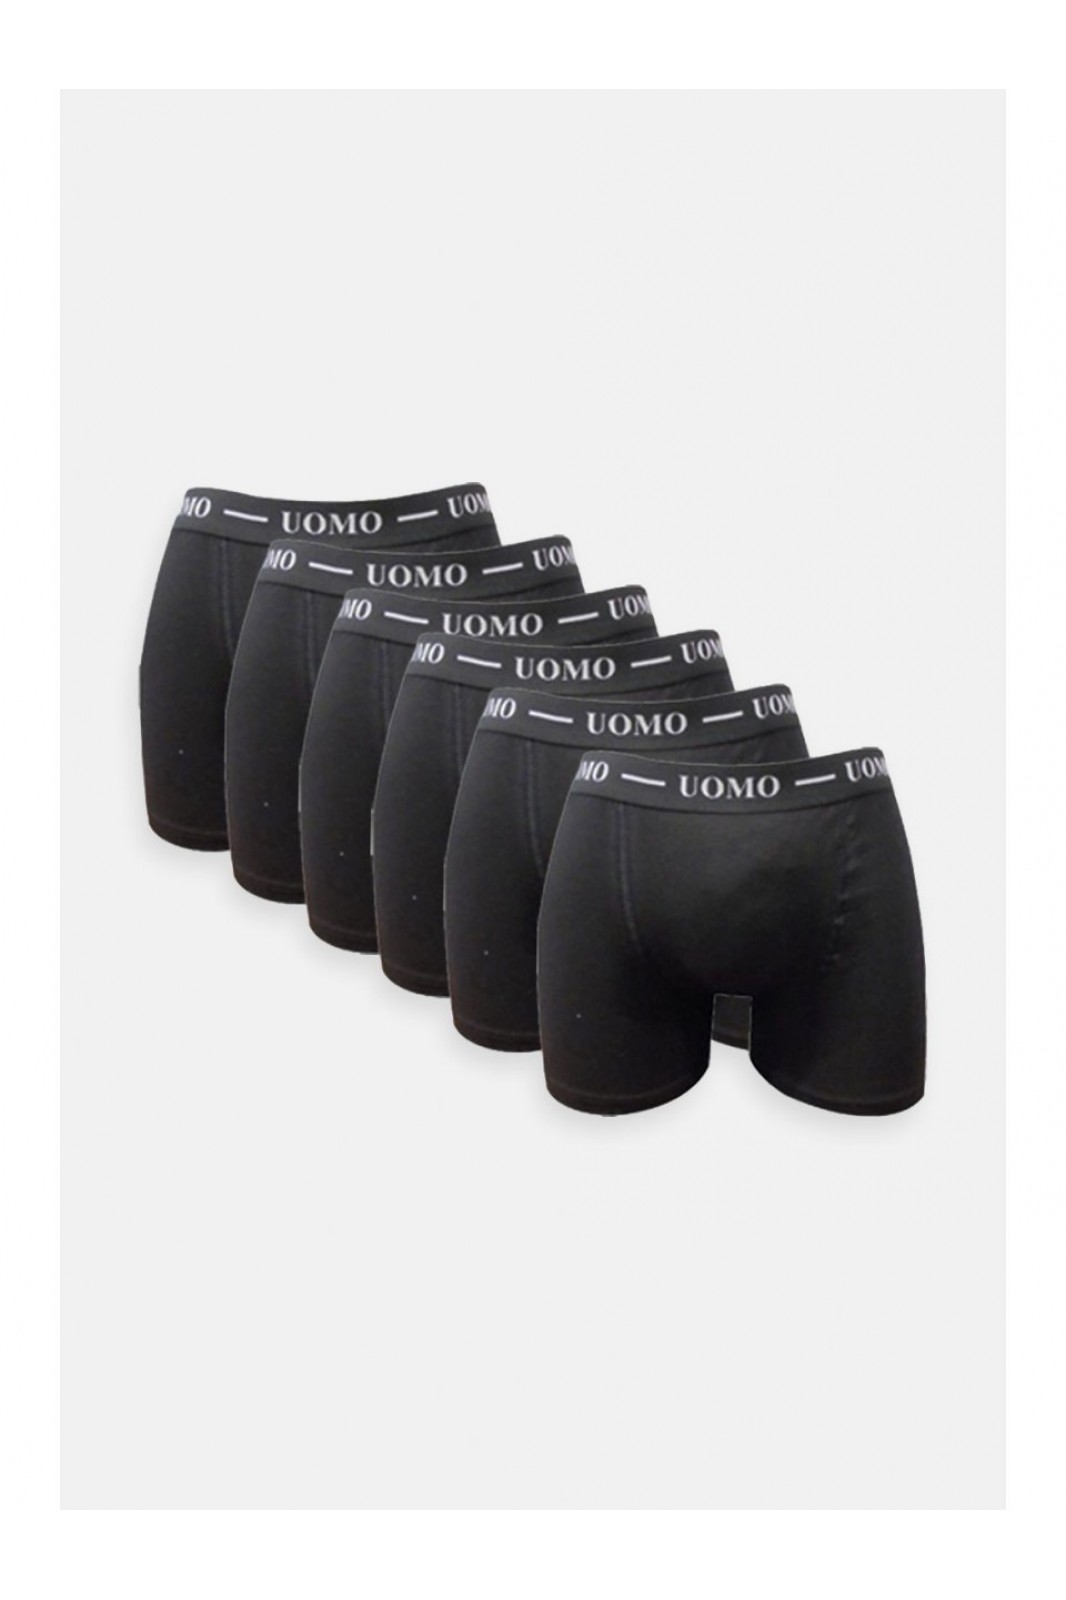 Men underwear boxer UOMO Black 6 Pack - MoutakisWorld.com